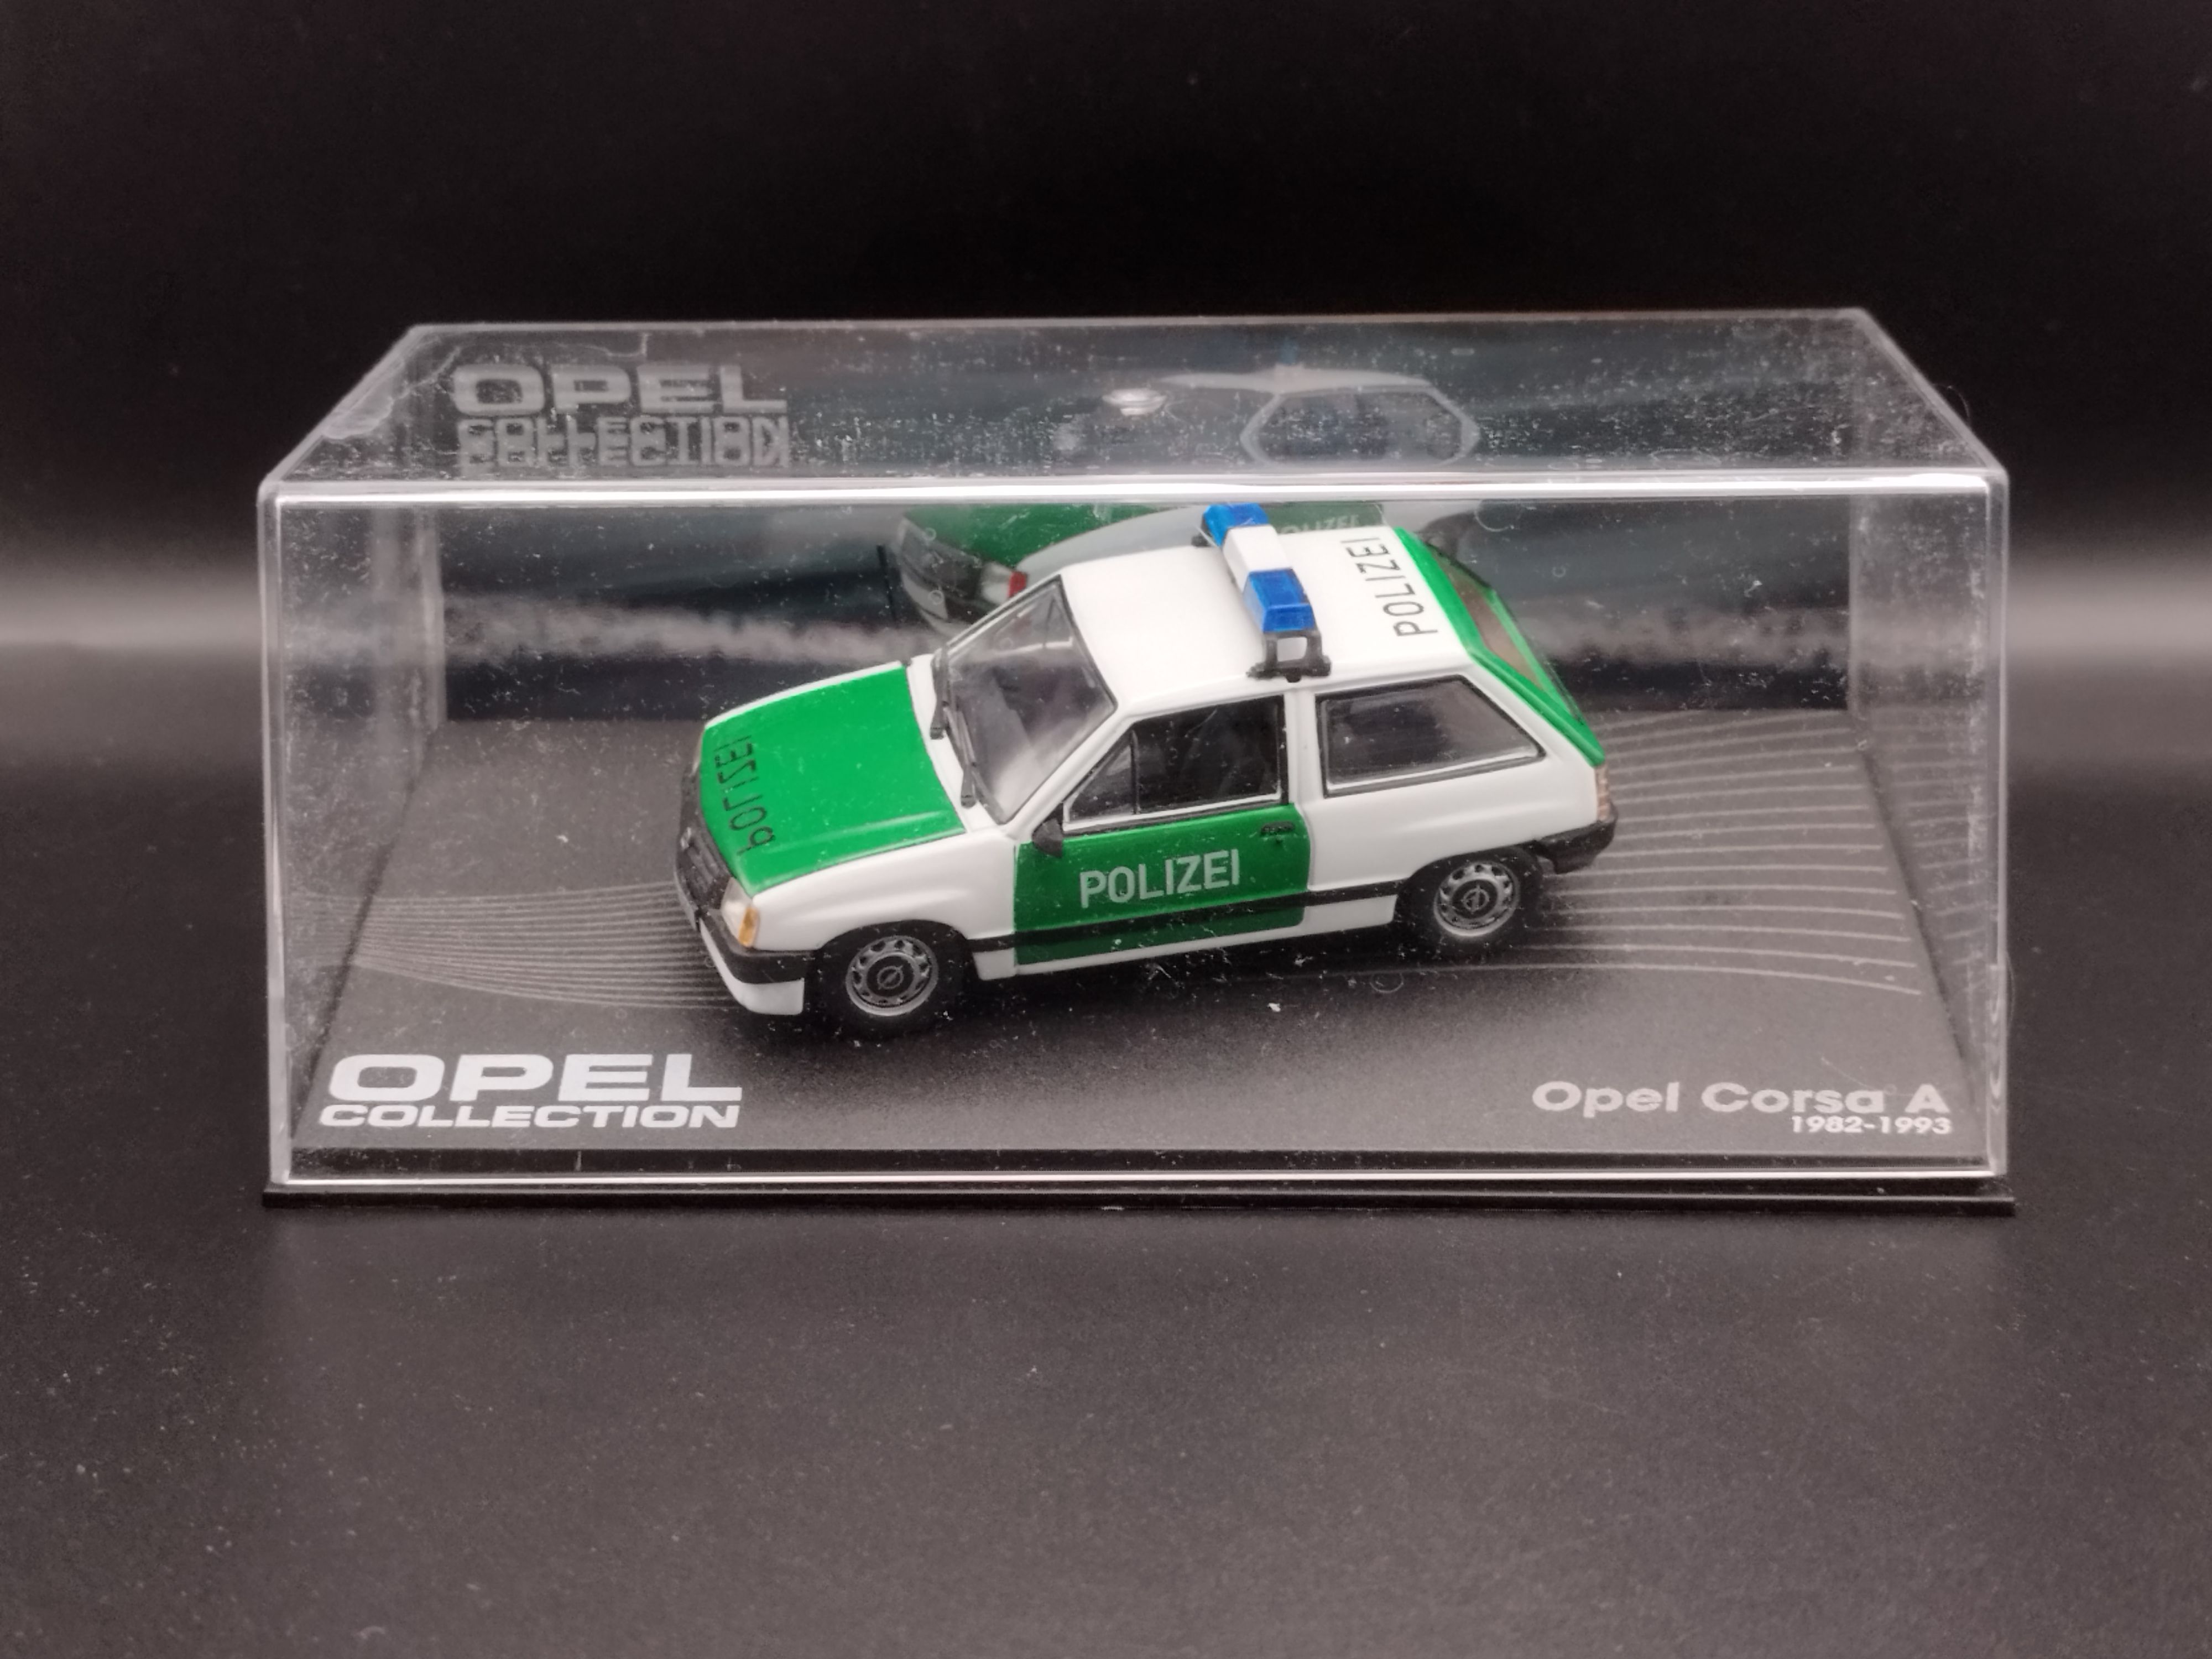 1:43 Opel Collection Opel Corsa A Polizei  model używany